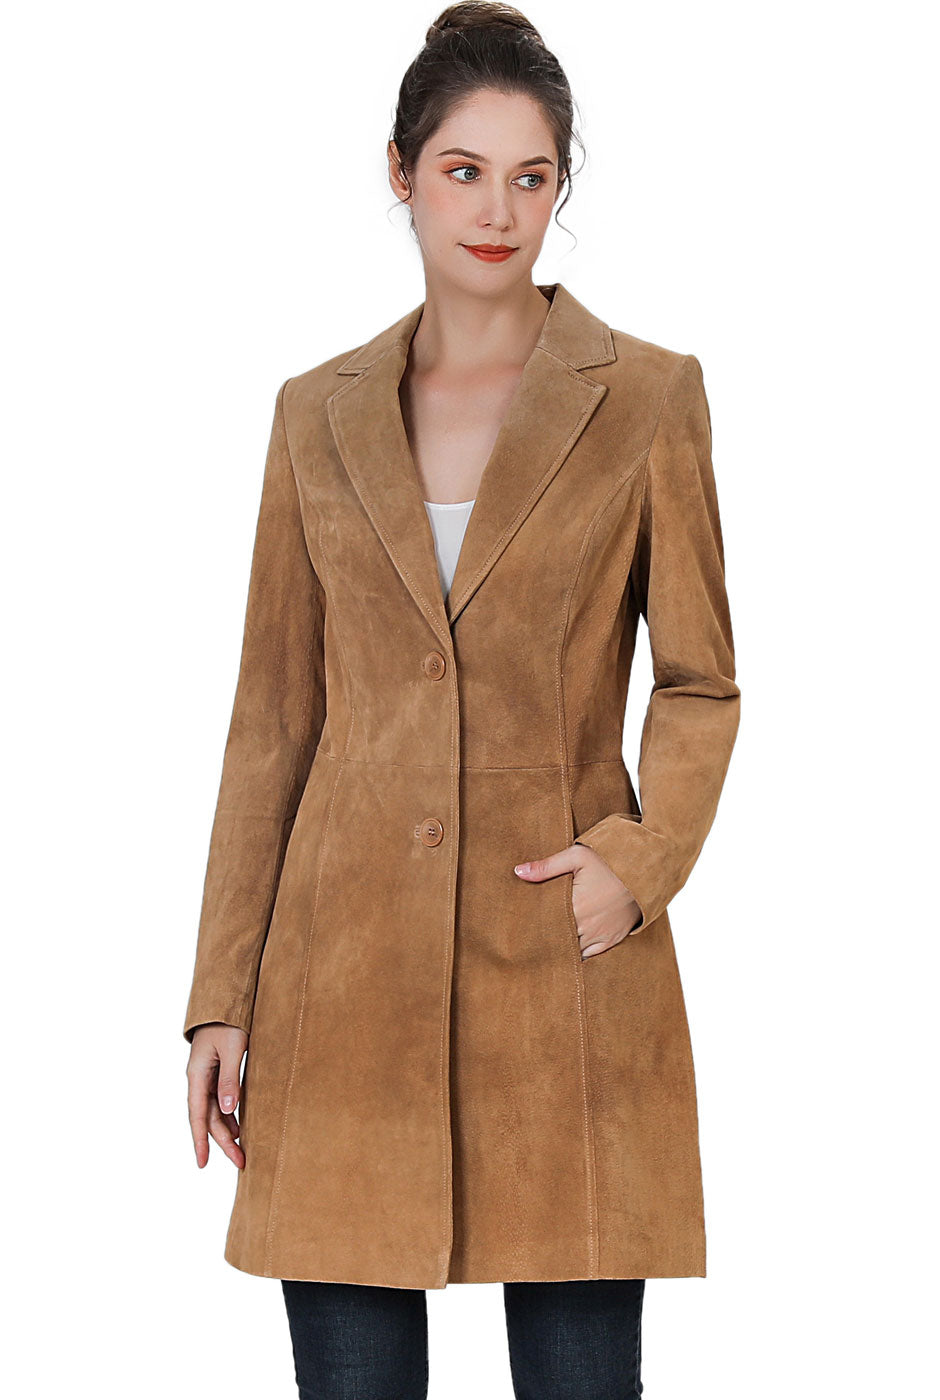 BGSD Women Mary Suede Leather Walker Coat